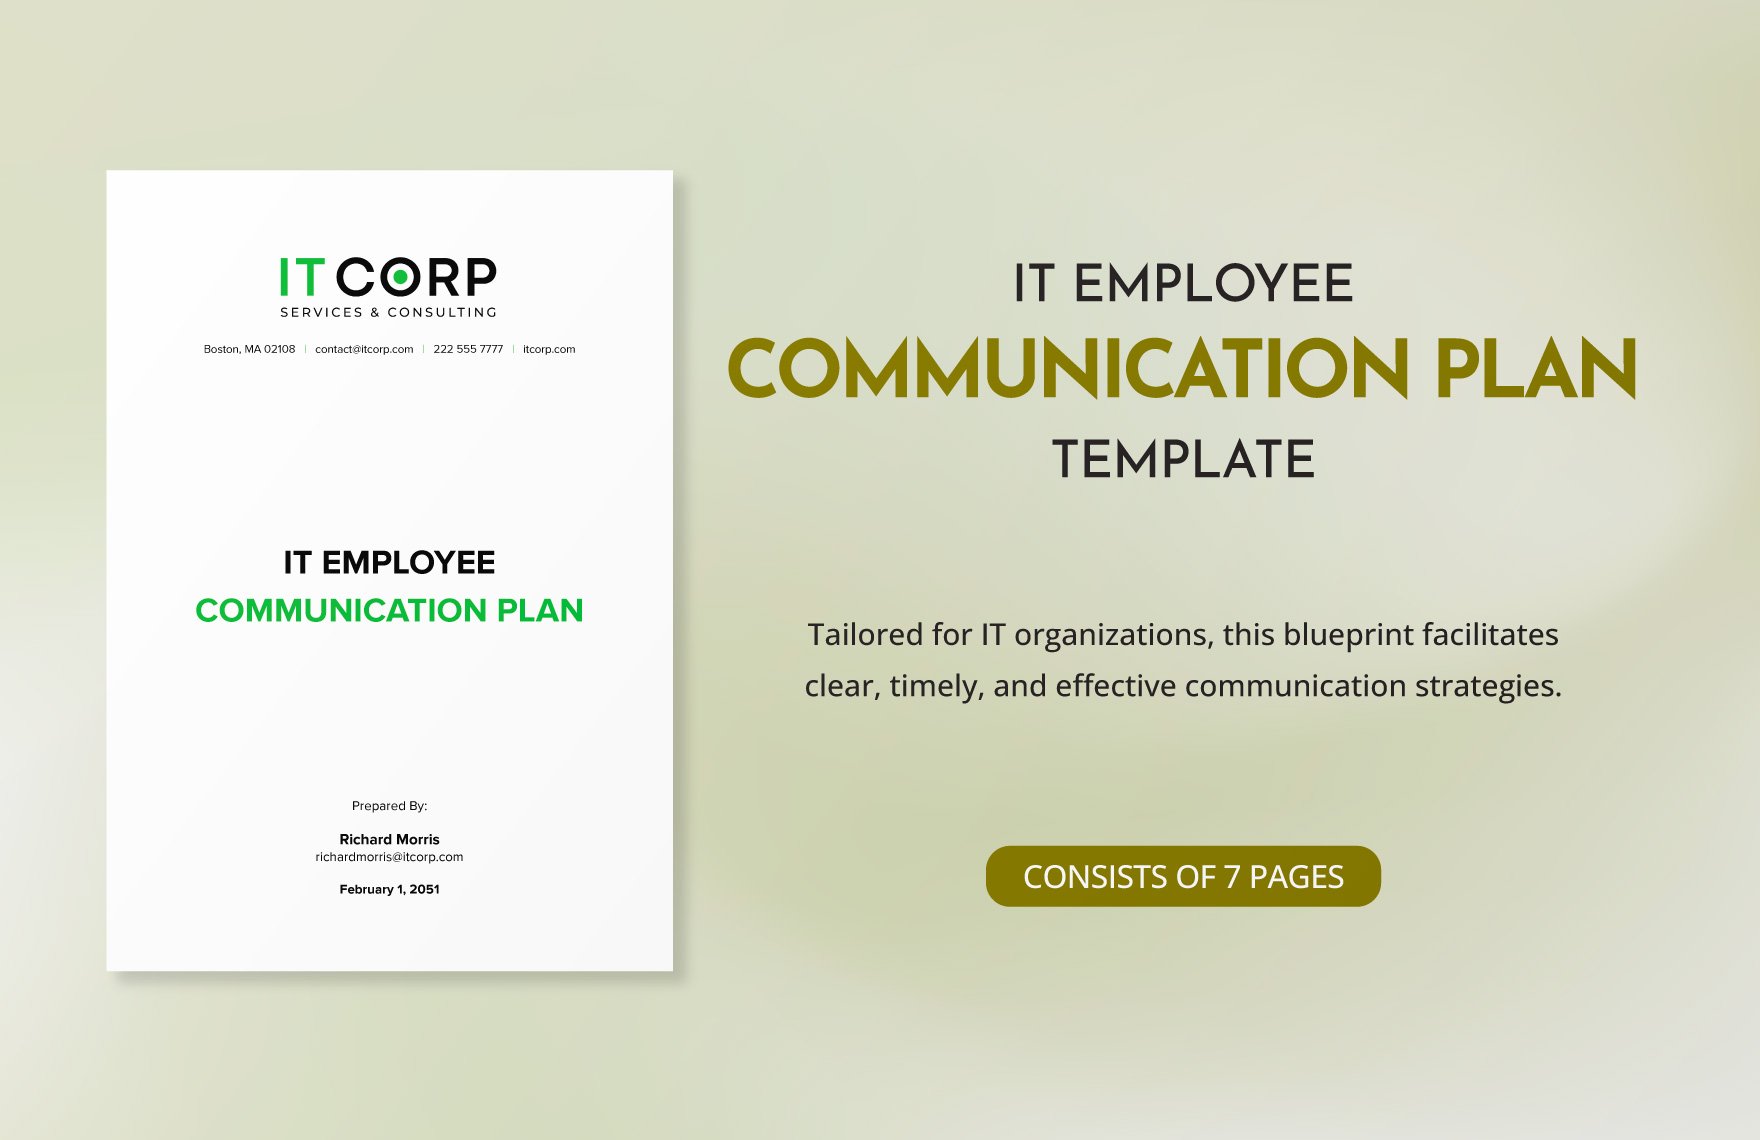 IT Employee Communication Plan Template